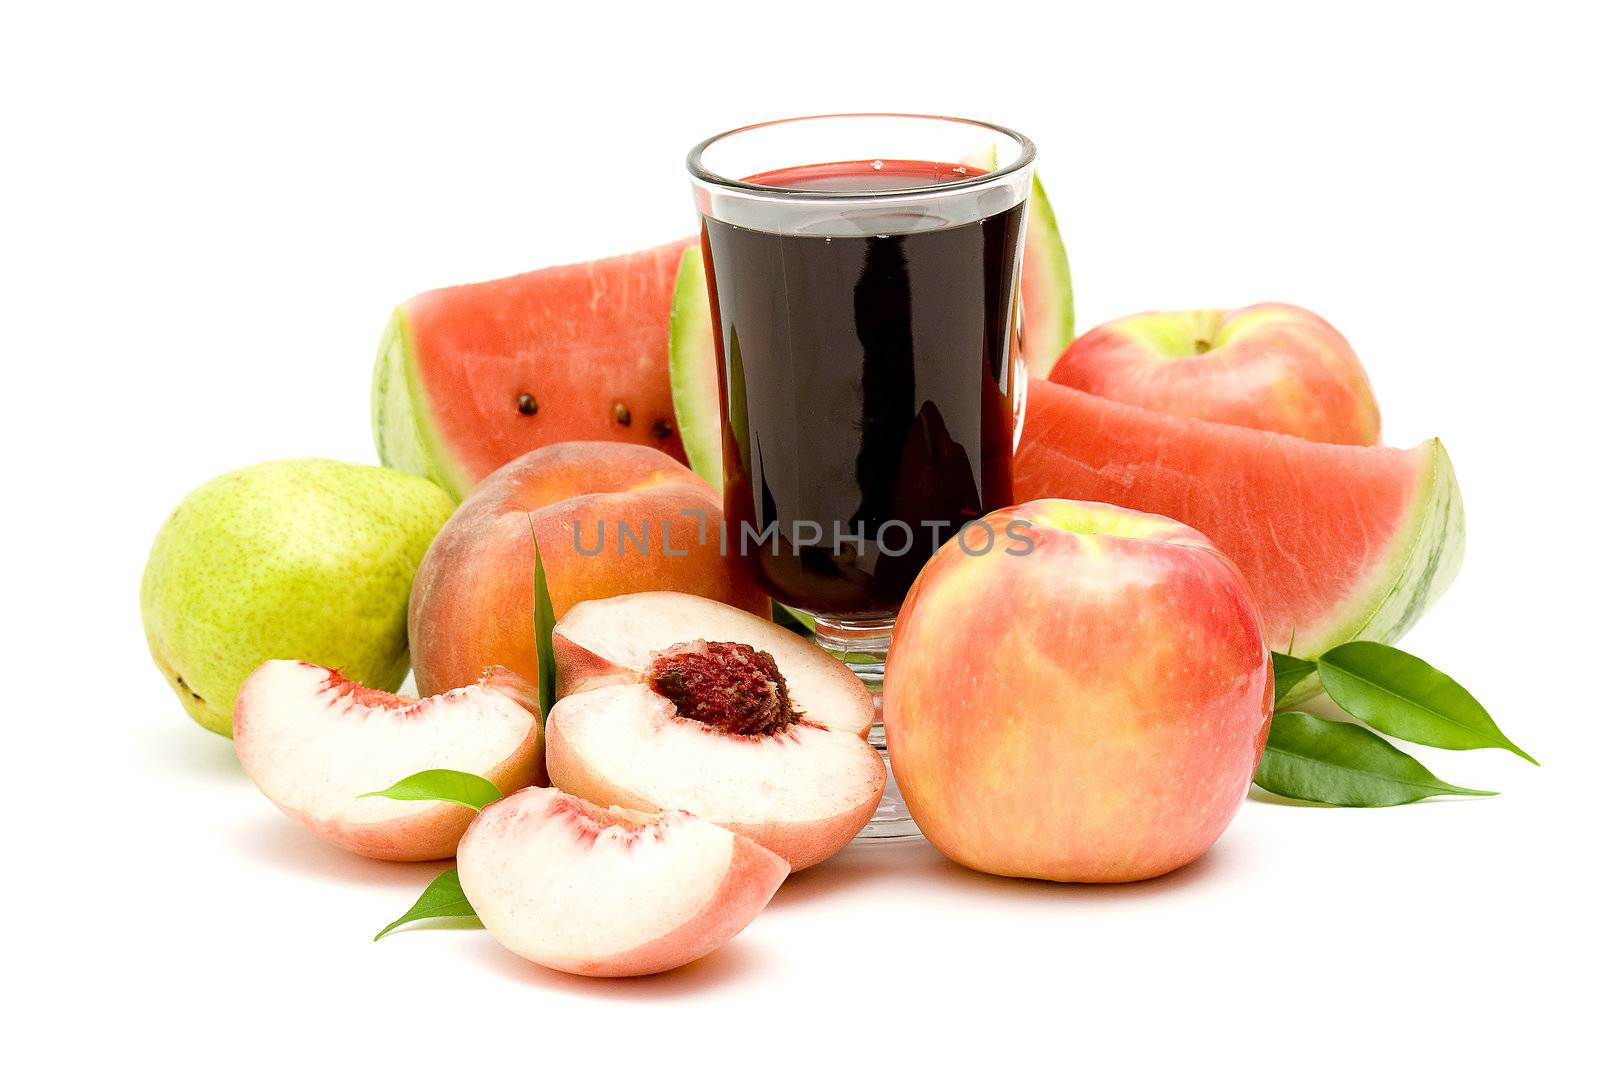 glass of fruit juice and fresh fruits isolated on white  by miradrozdowski